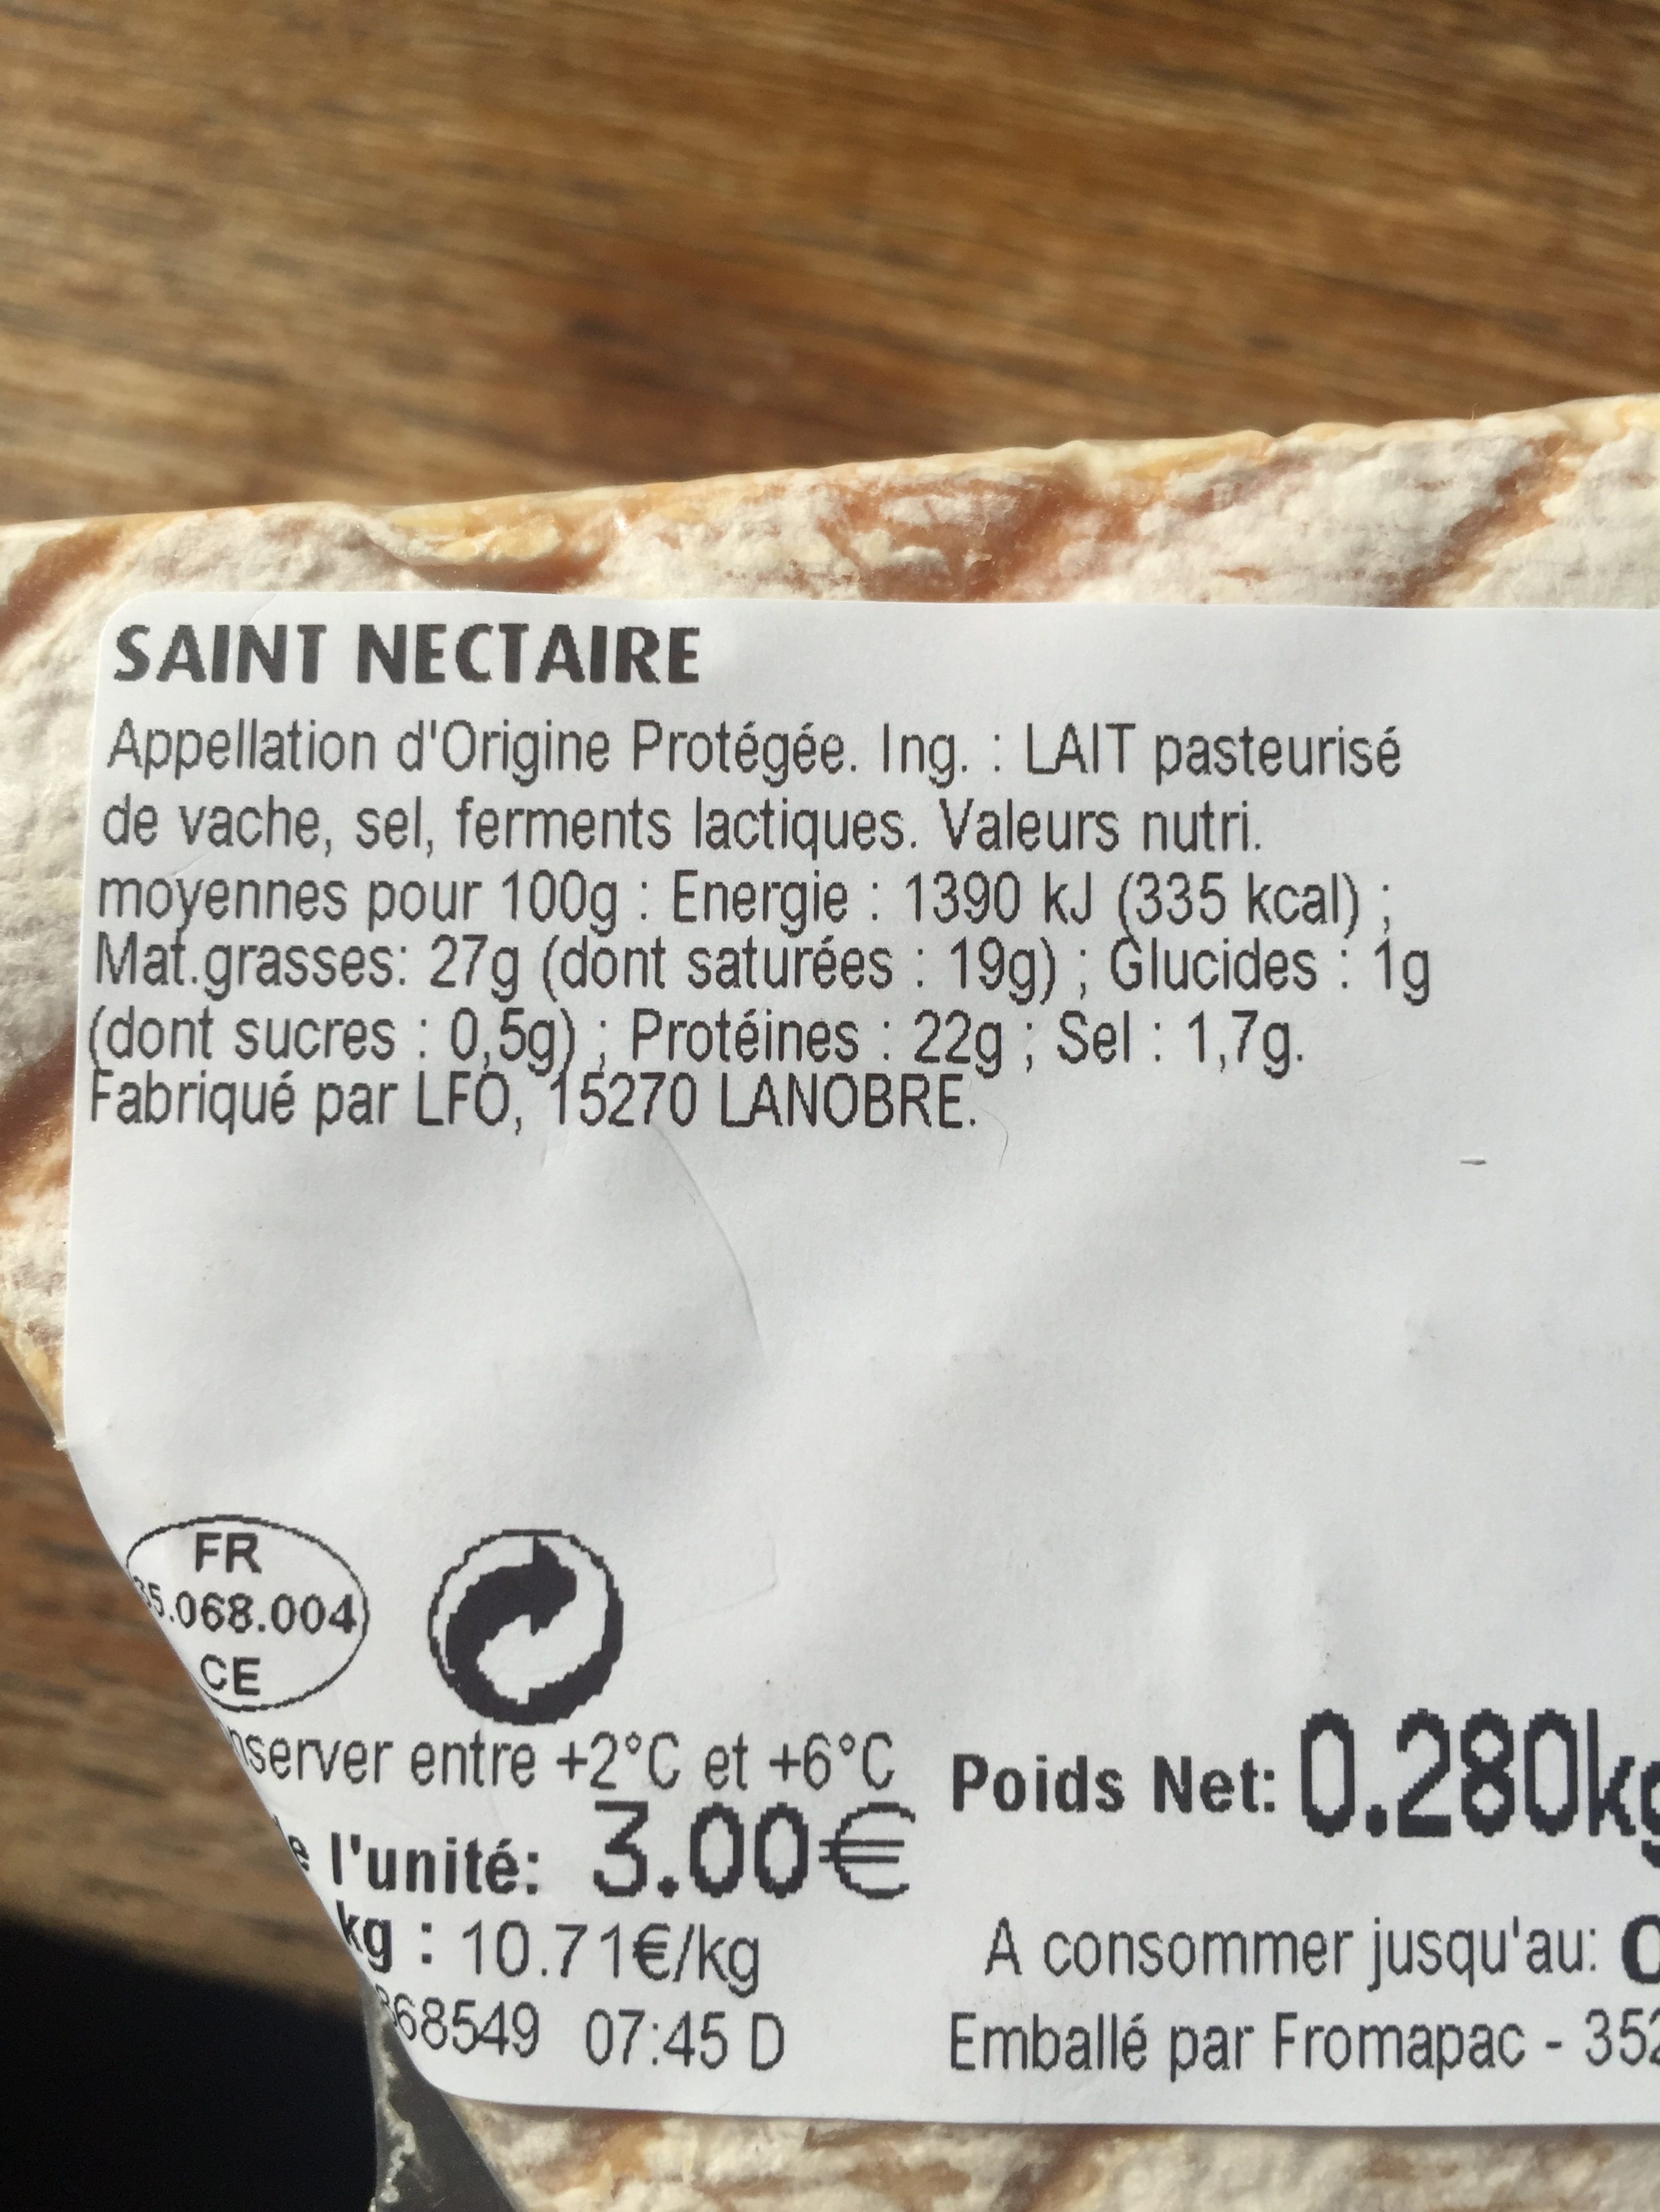 Saint nectaire - Ingredients - fr